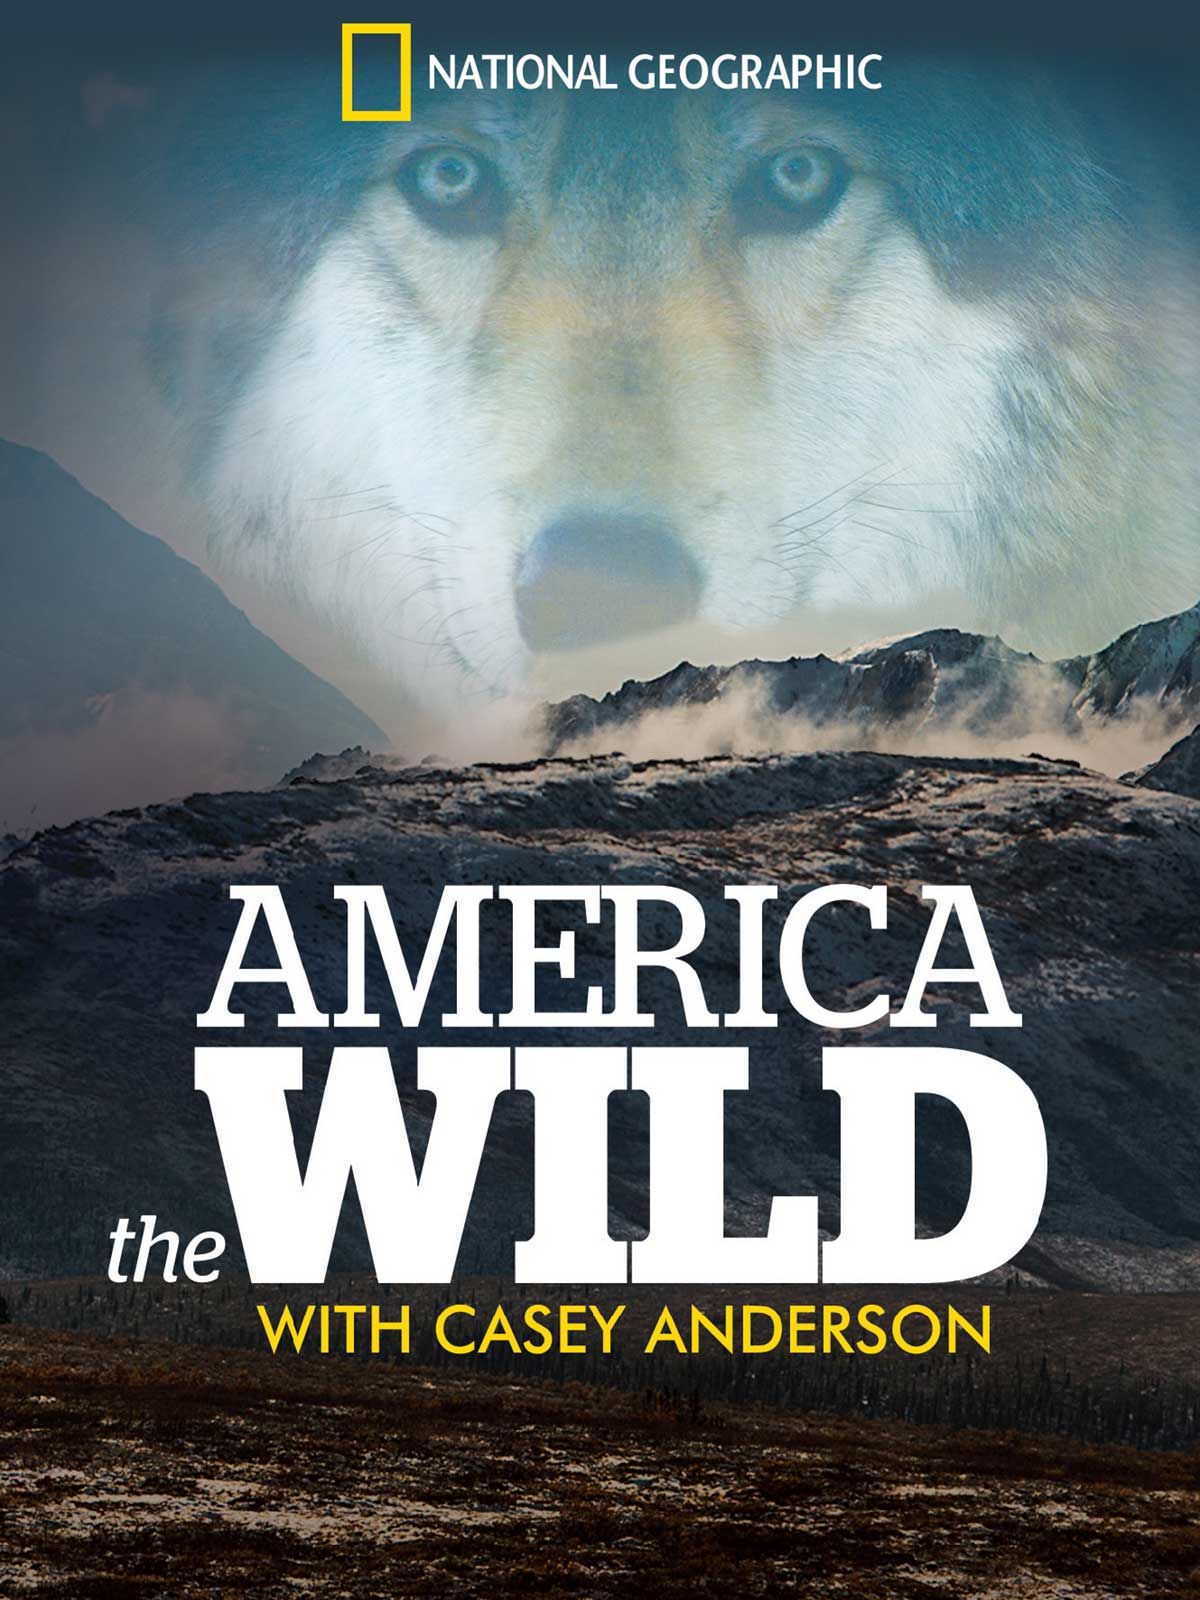 America the Wild III